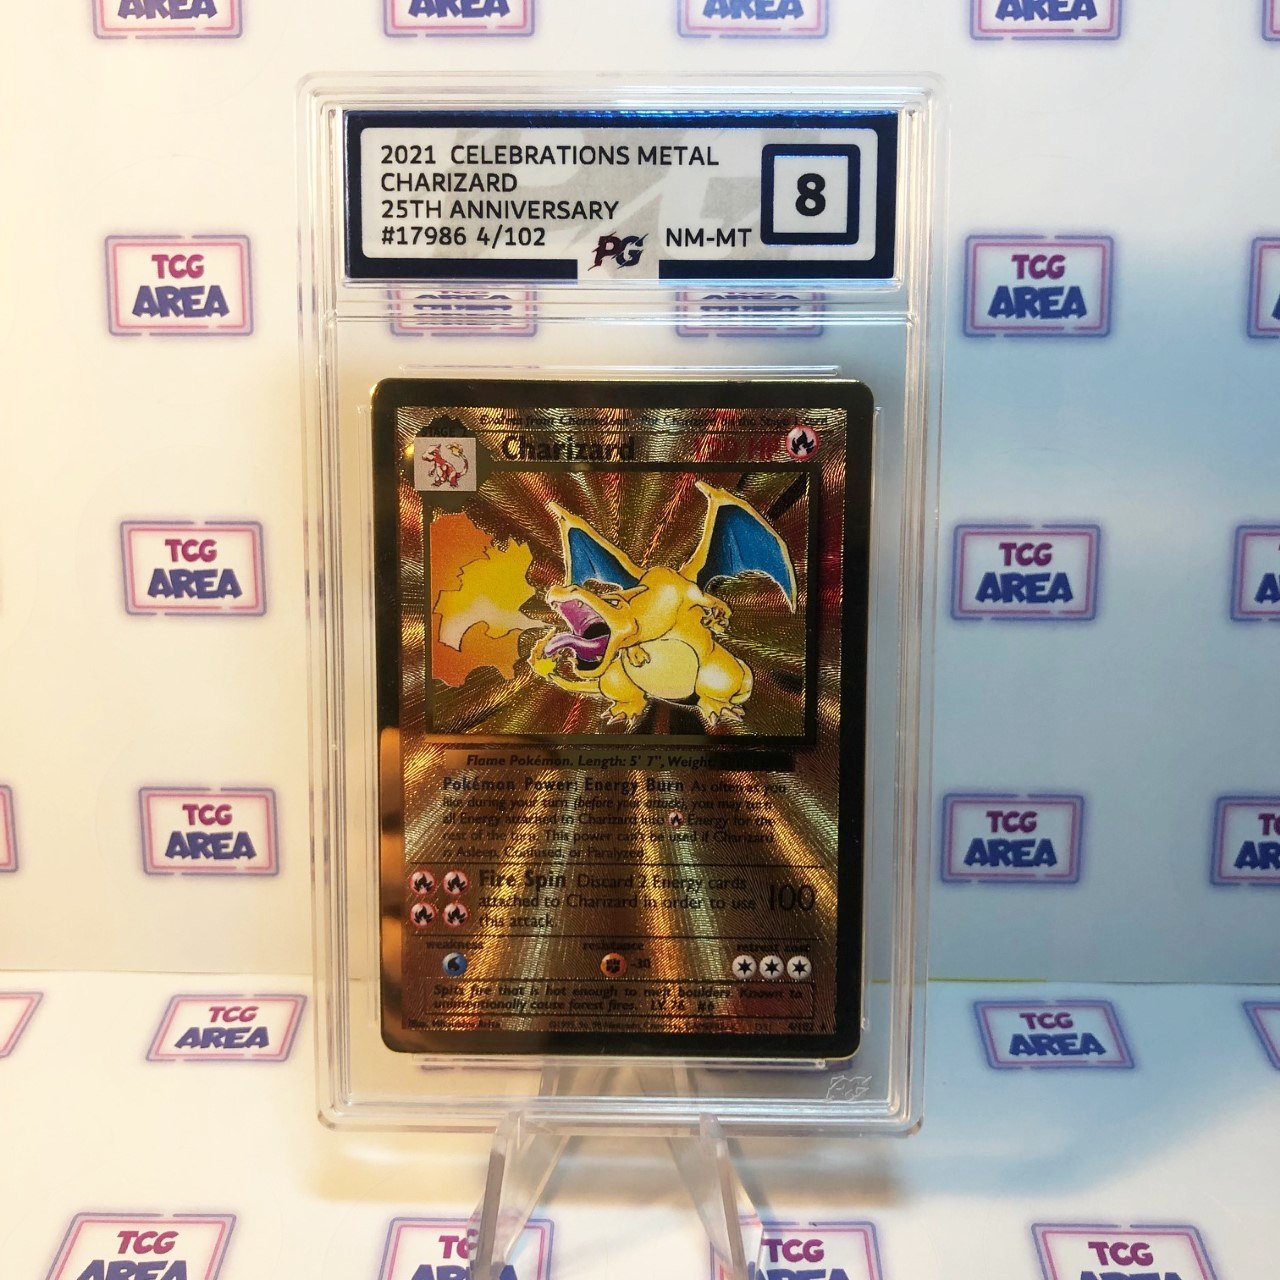 Carte Pokémon Dracaufeu 4/102 Métal Gold Fan Made Édition 1 FR